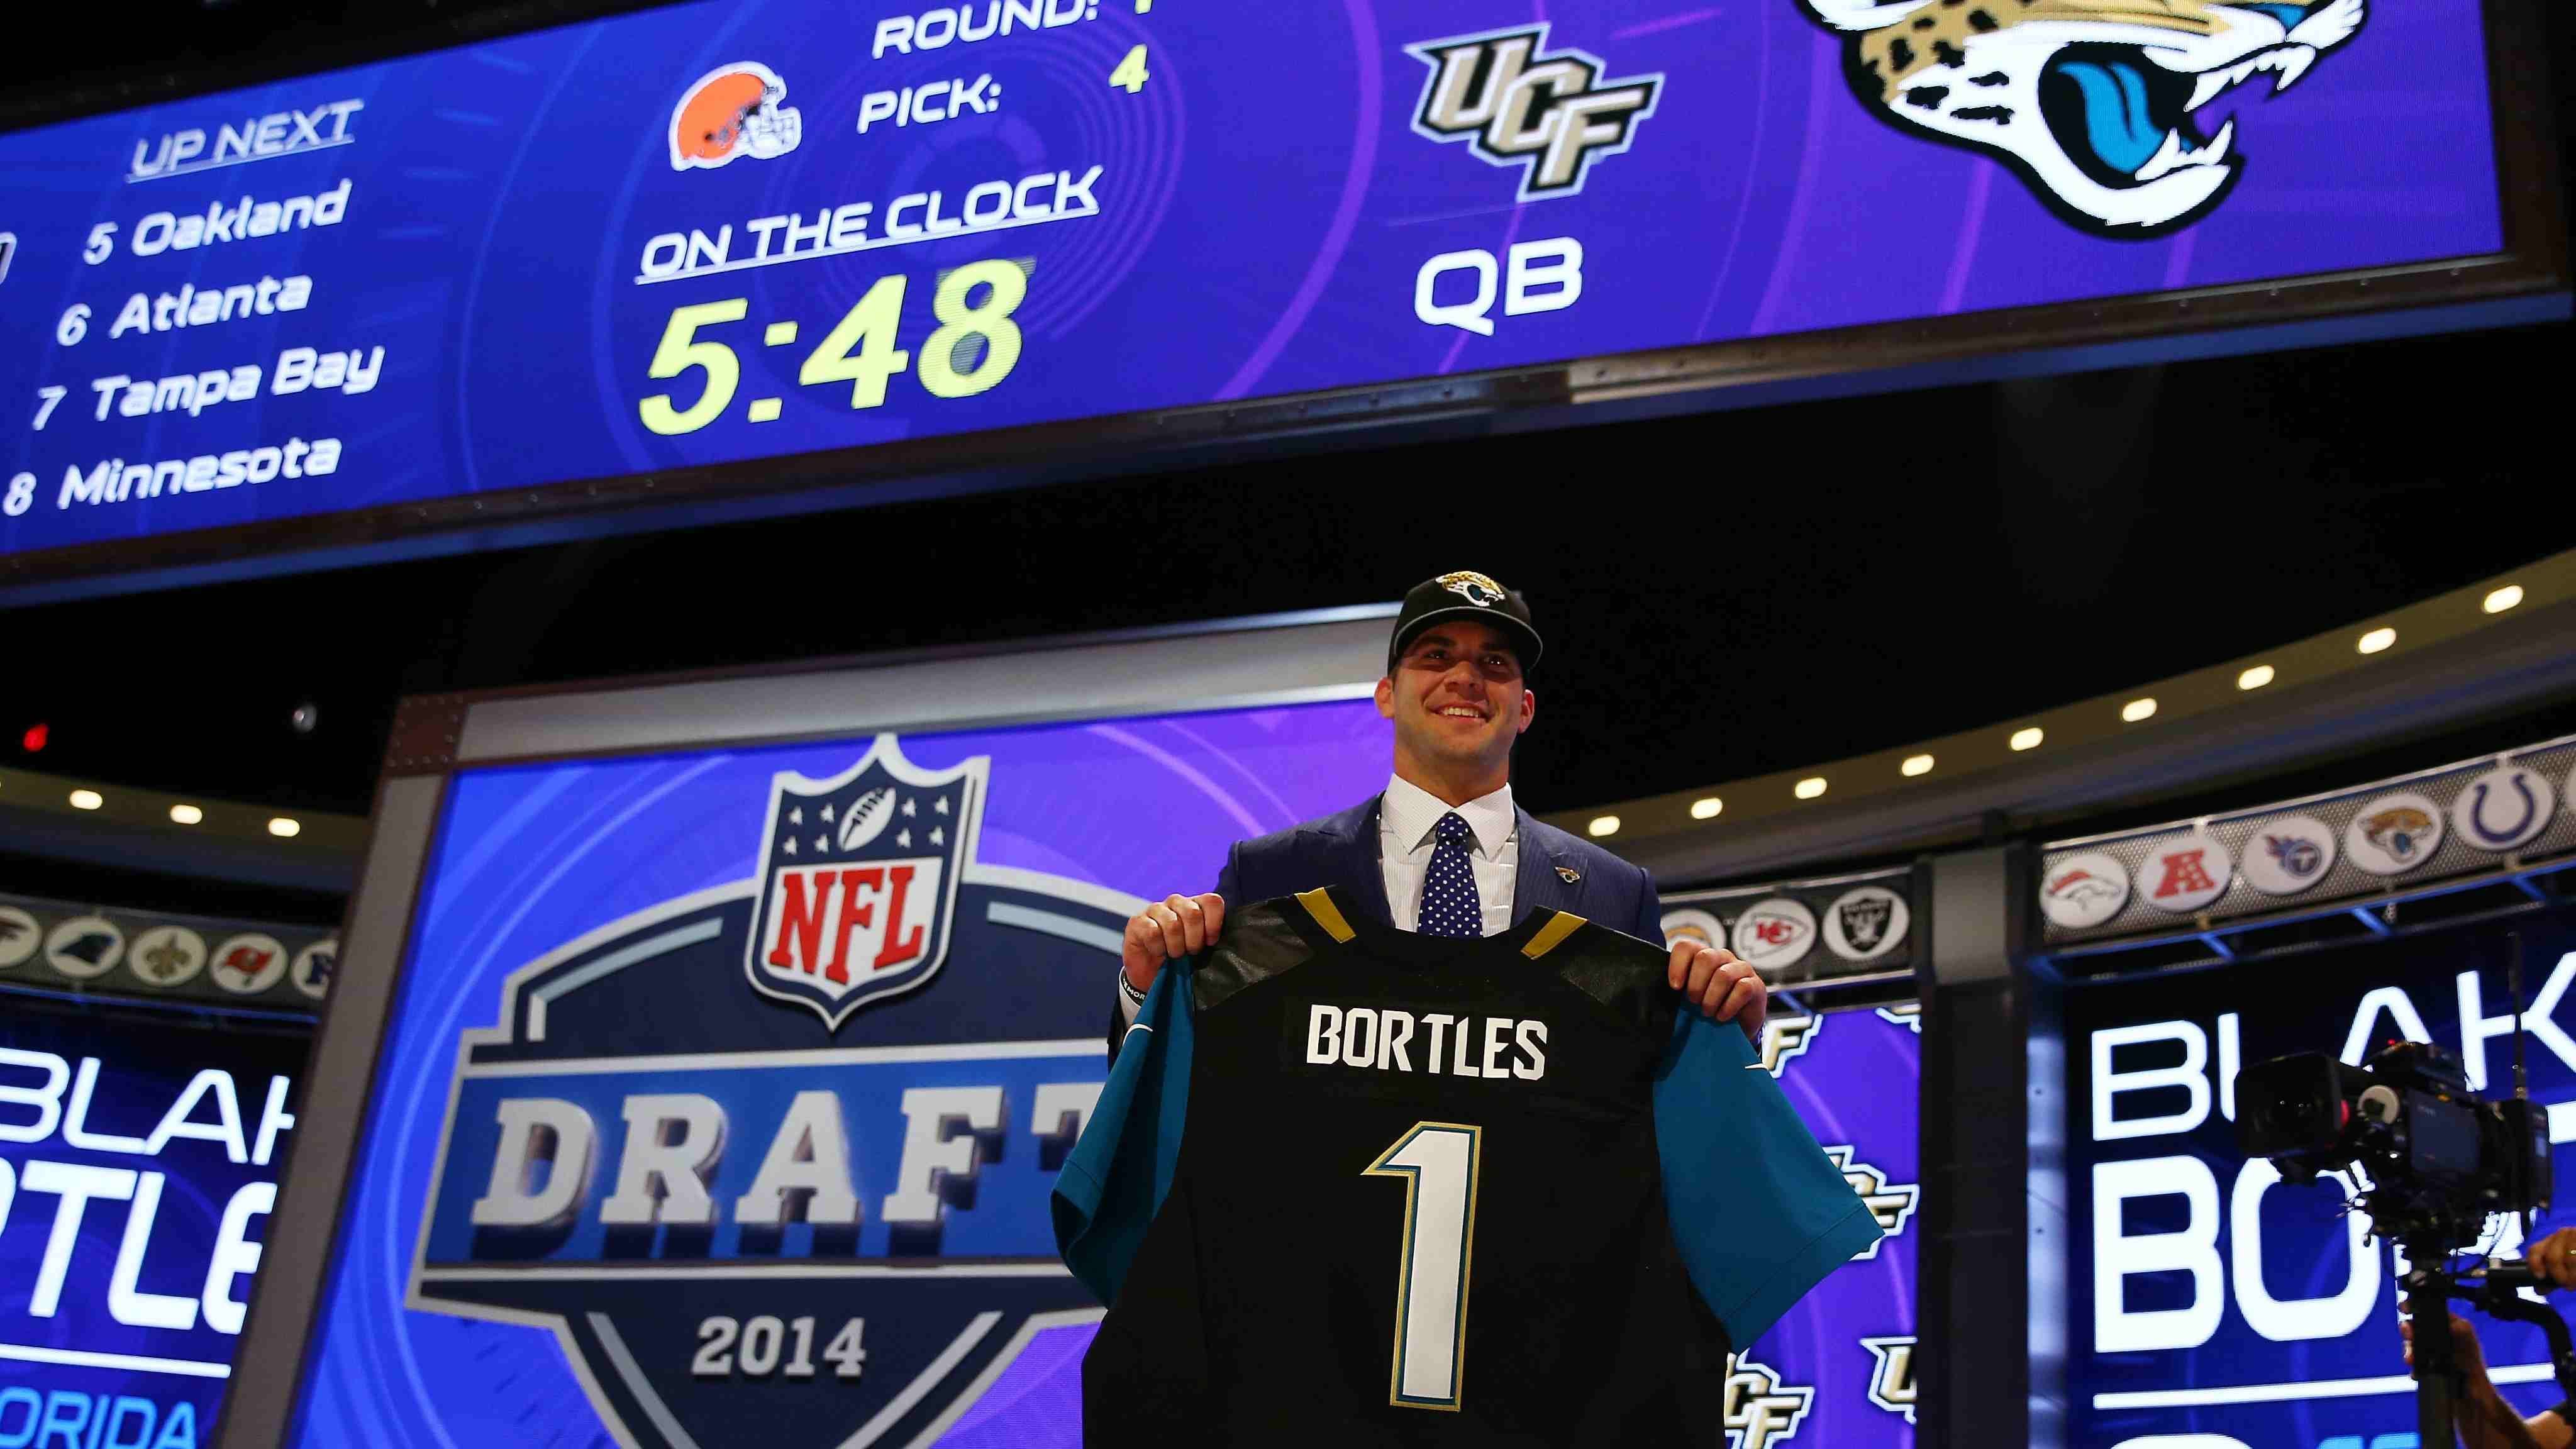 
                <strong>Blakes Bortles </strong><br>
                 - Draft: 2014 an 3. Stelle von den Jacksonville Jaguars -  - Stationen: Jacksonville Jaguars 2014 bis 2018, Los Angeles Rams 2019, Denver Broncos 2020, Los Angeles Rams 2020  - Aktuell: Free Agent
              